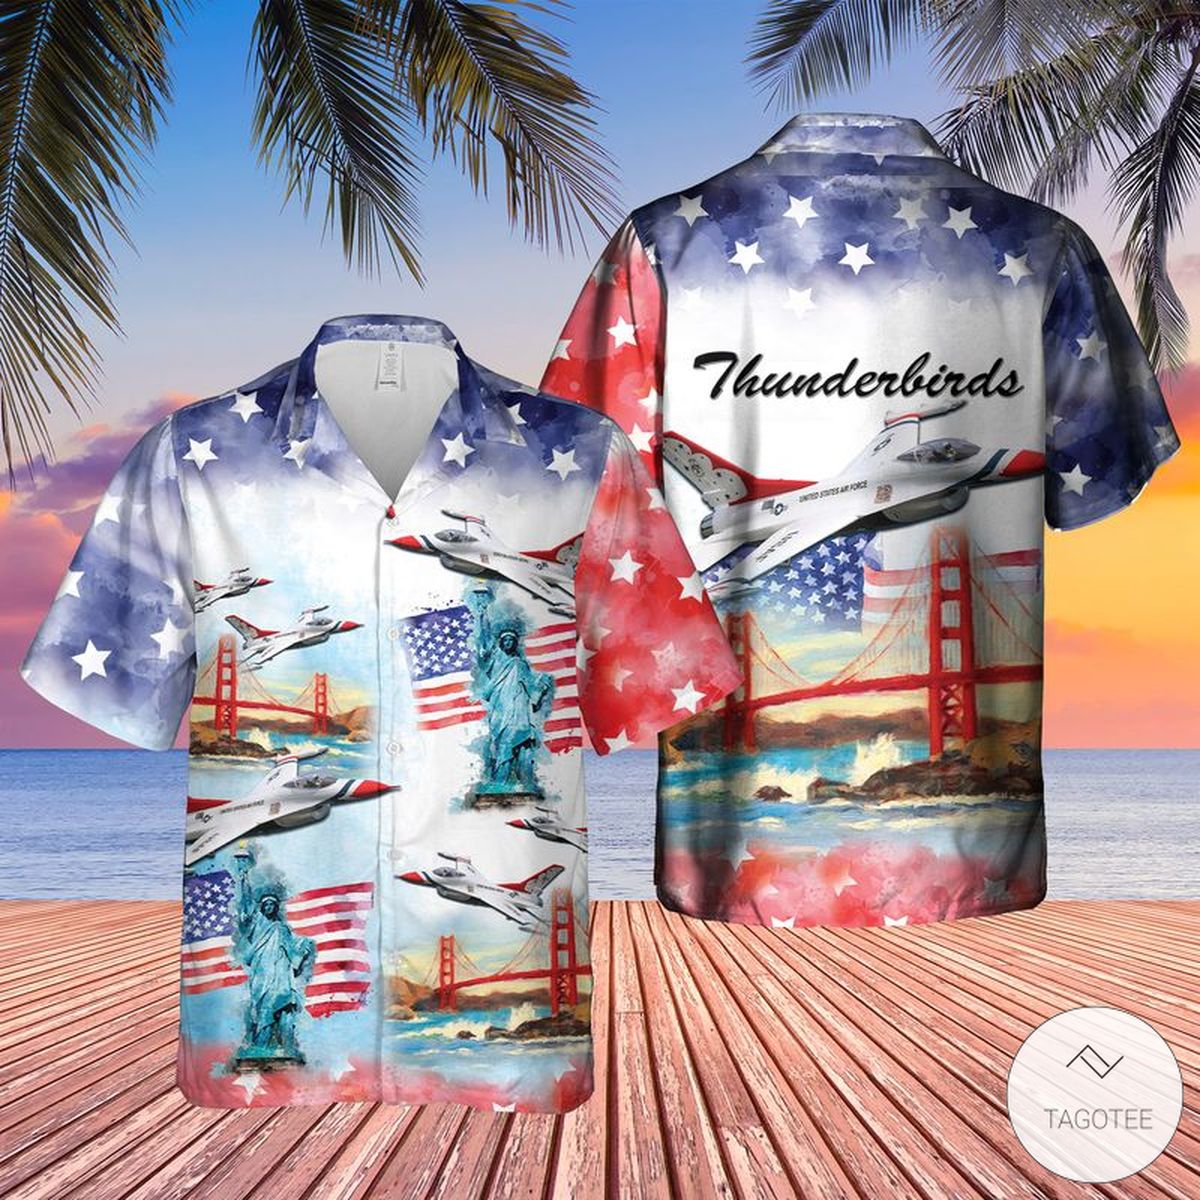 Thunderbirds USAF Air Show 4th of July Hawaiian Shirt Beach Shorts